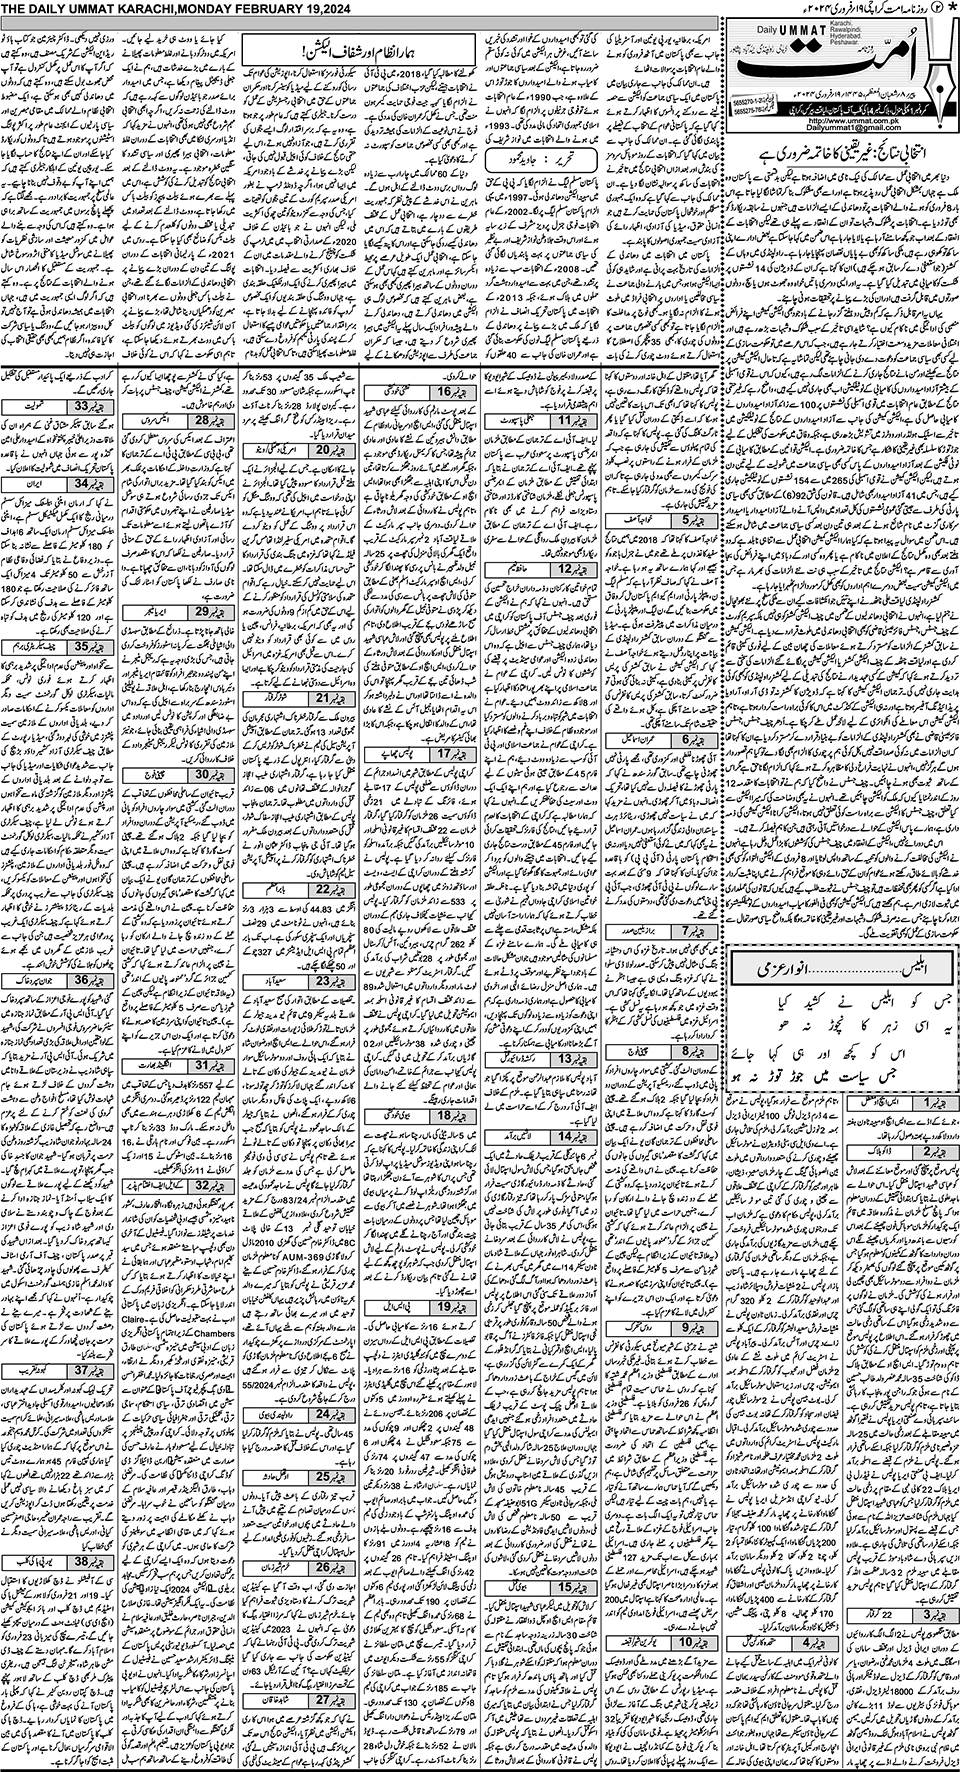 Ummat Epaper - KHI - KHI_PAGE02